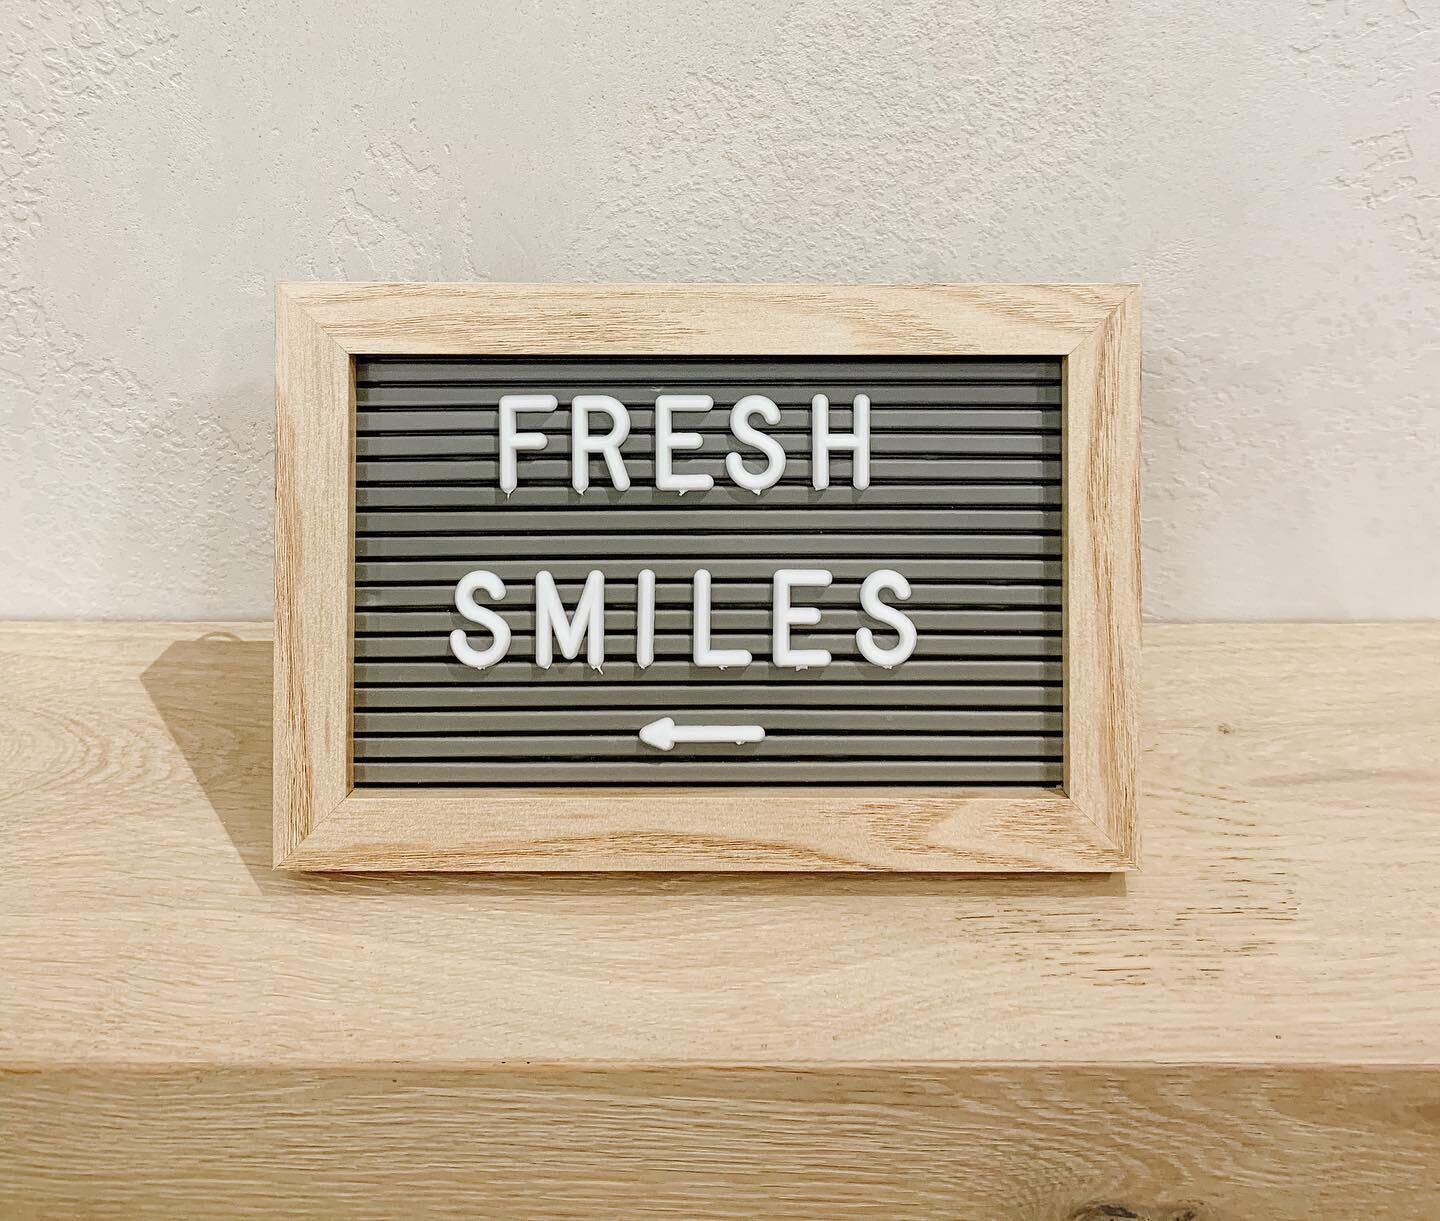 Fresh smiles this way! 🦷✨